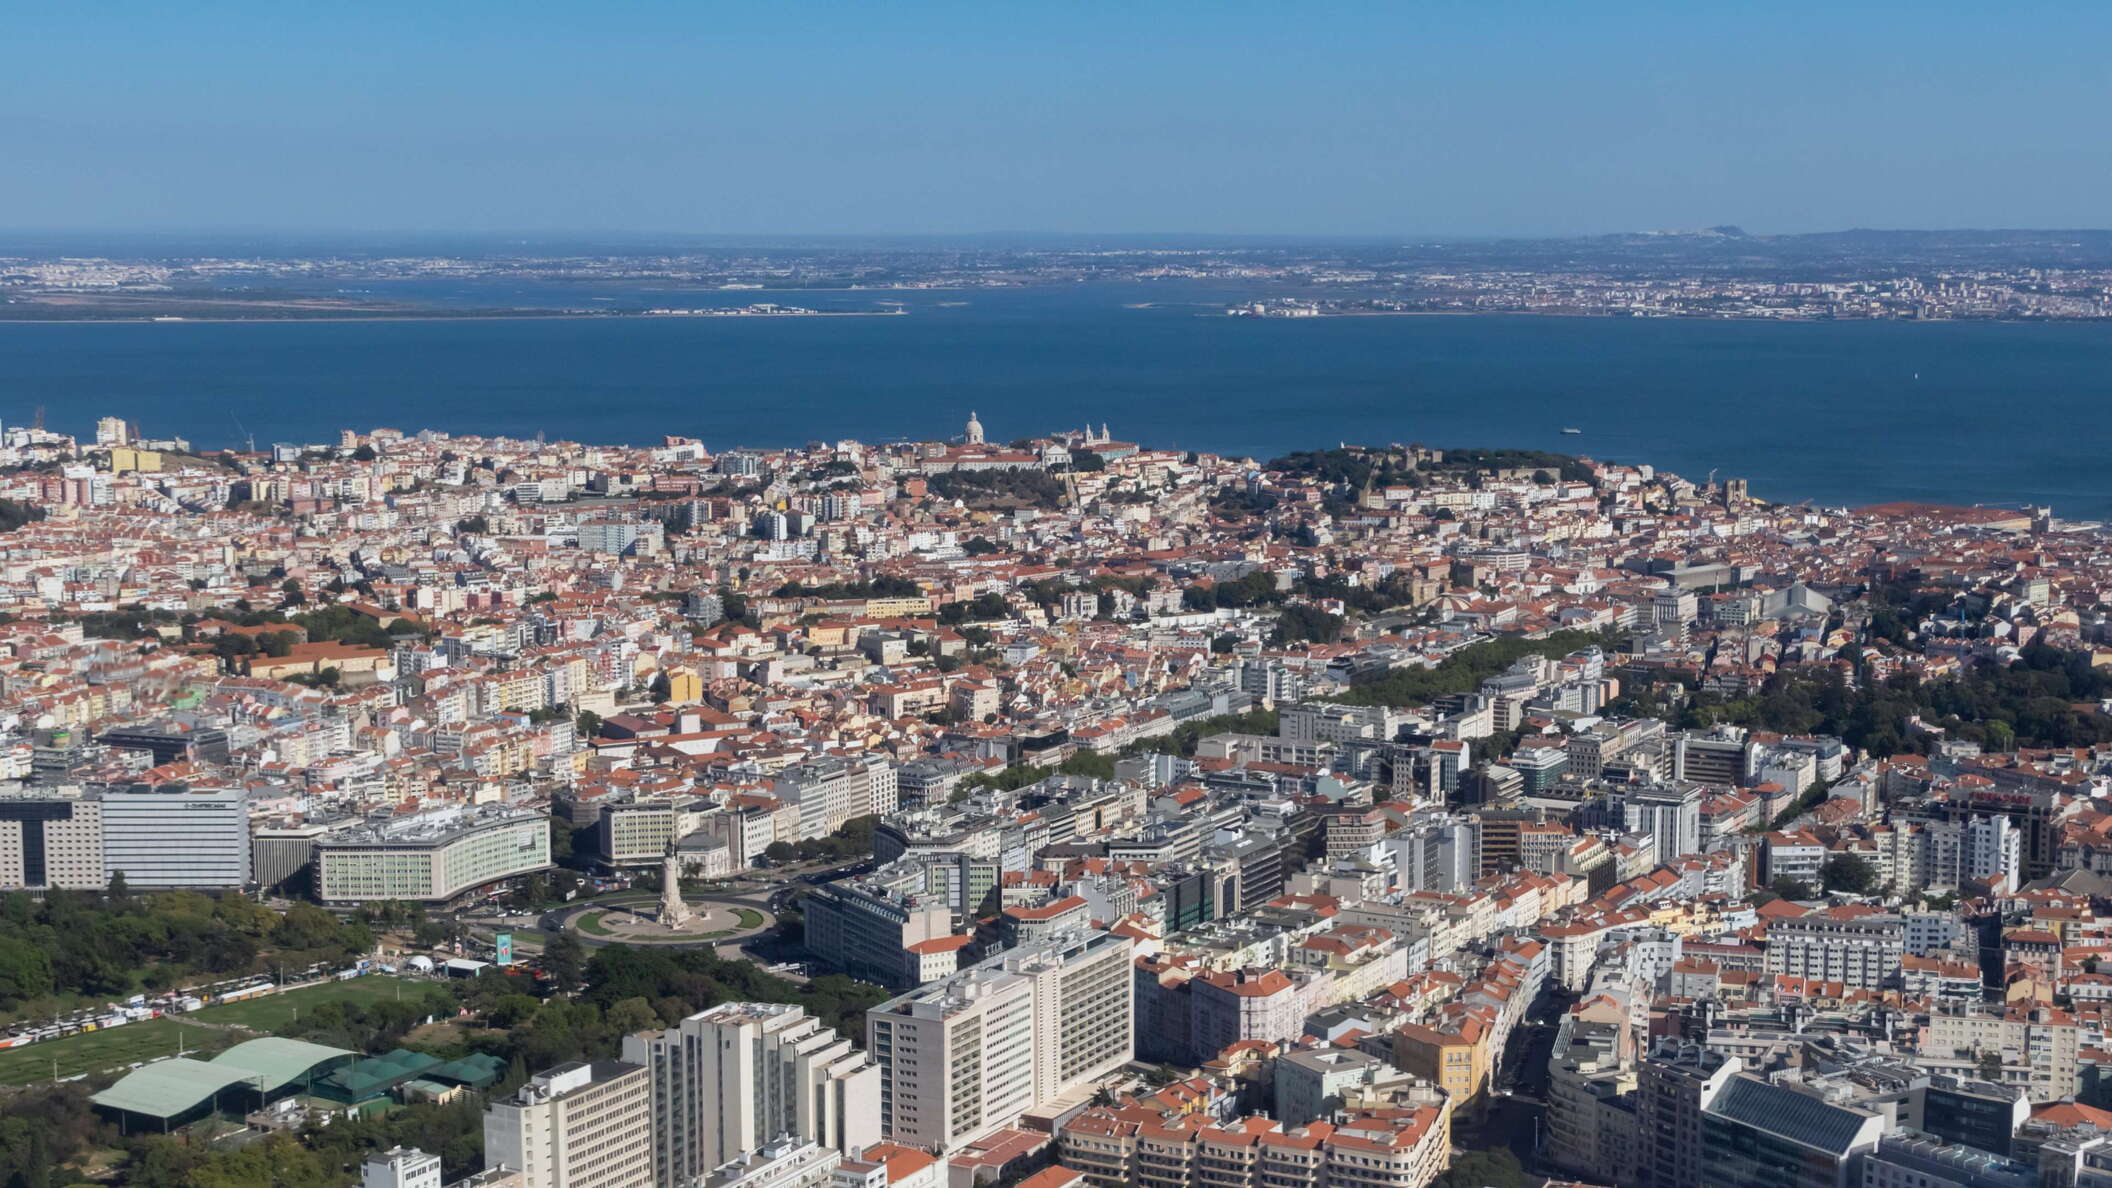 Lisboa | City centre with Rio Tejo